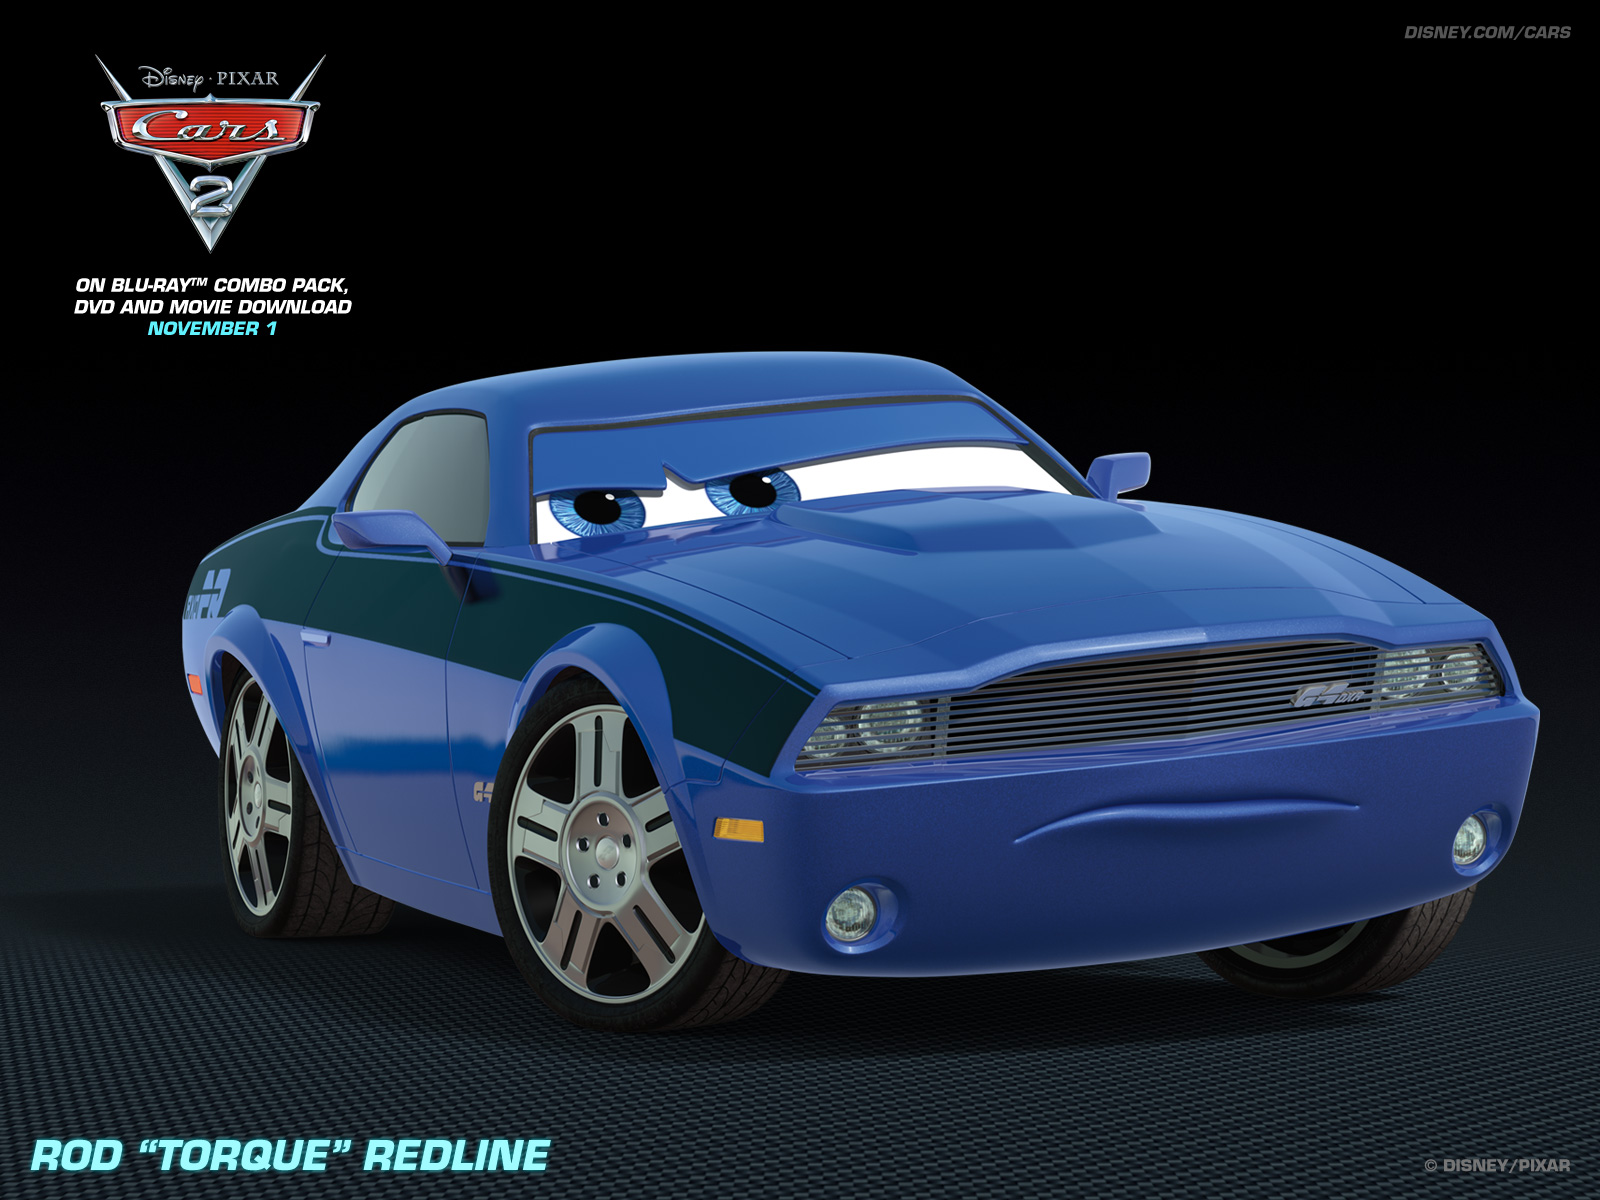 Rod Torque Redline Pixar Cars 2 Wallpaper